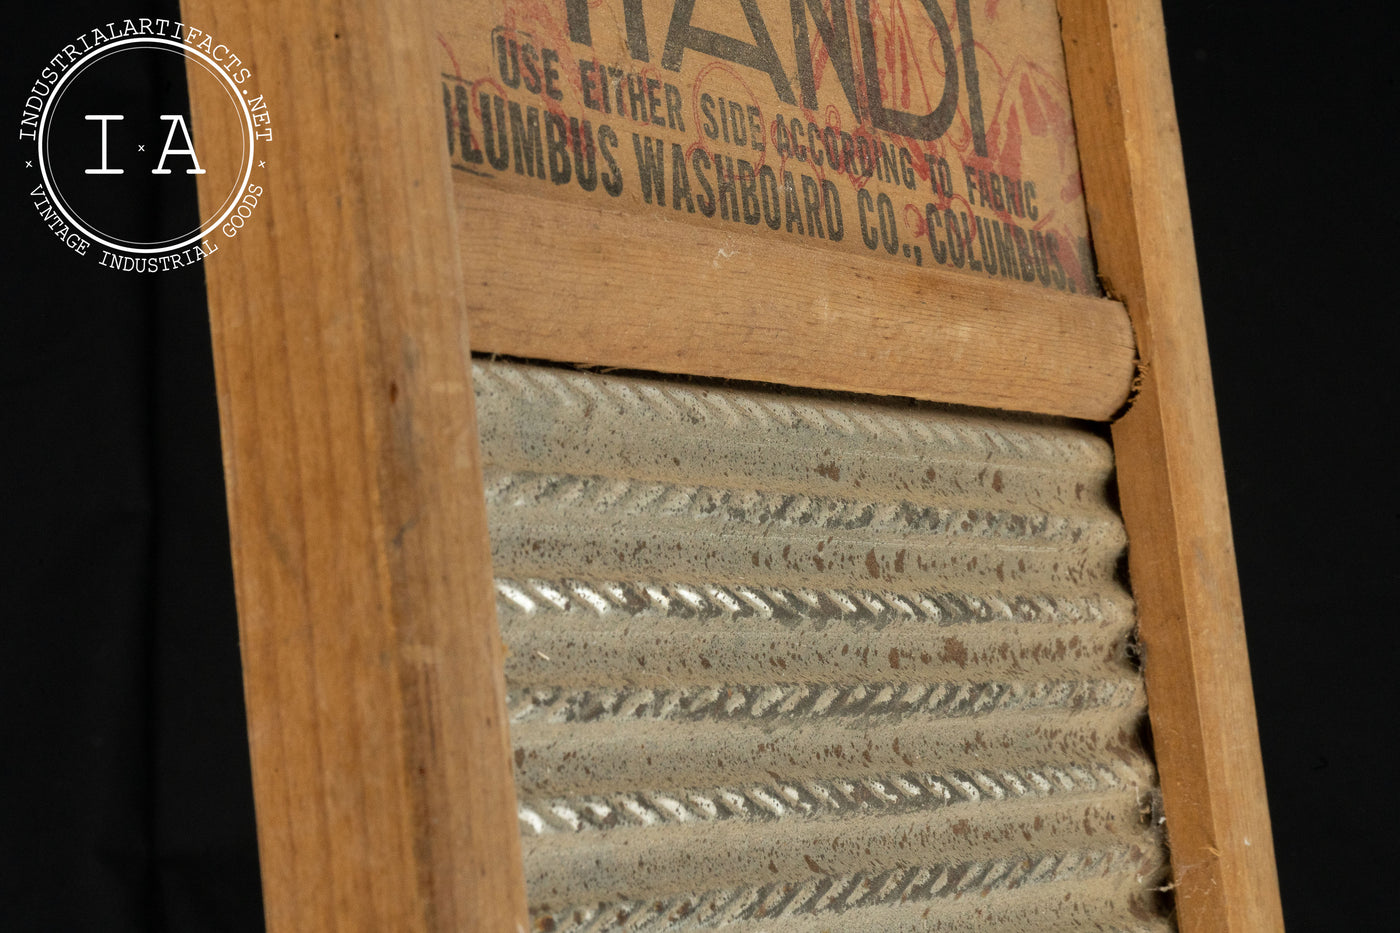 Vintage Dubl-Handi Columbus Washboard